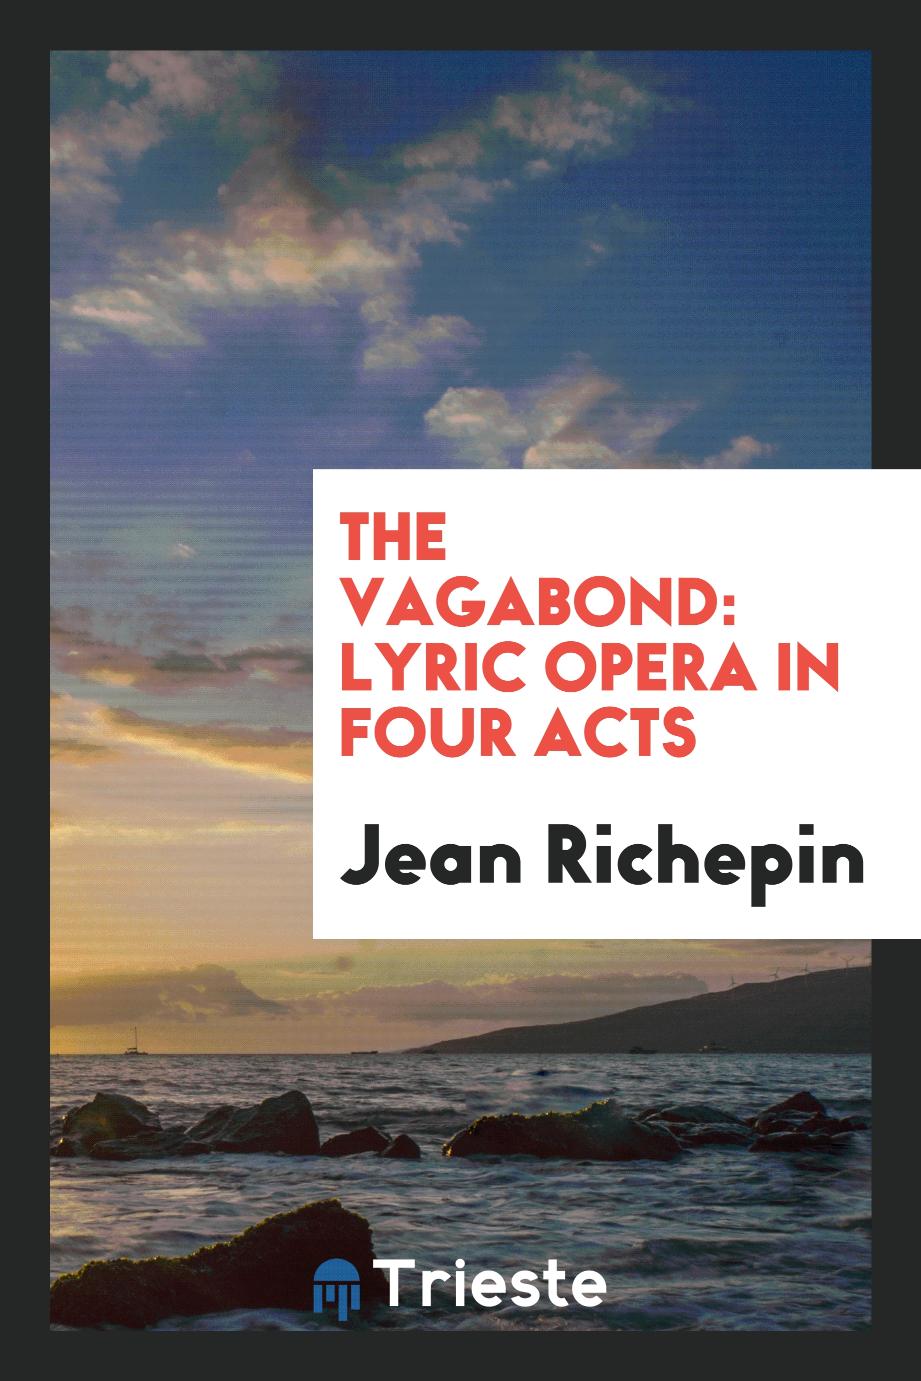 The vagabond: lyric opera in four acts